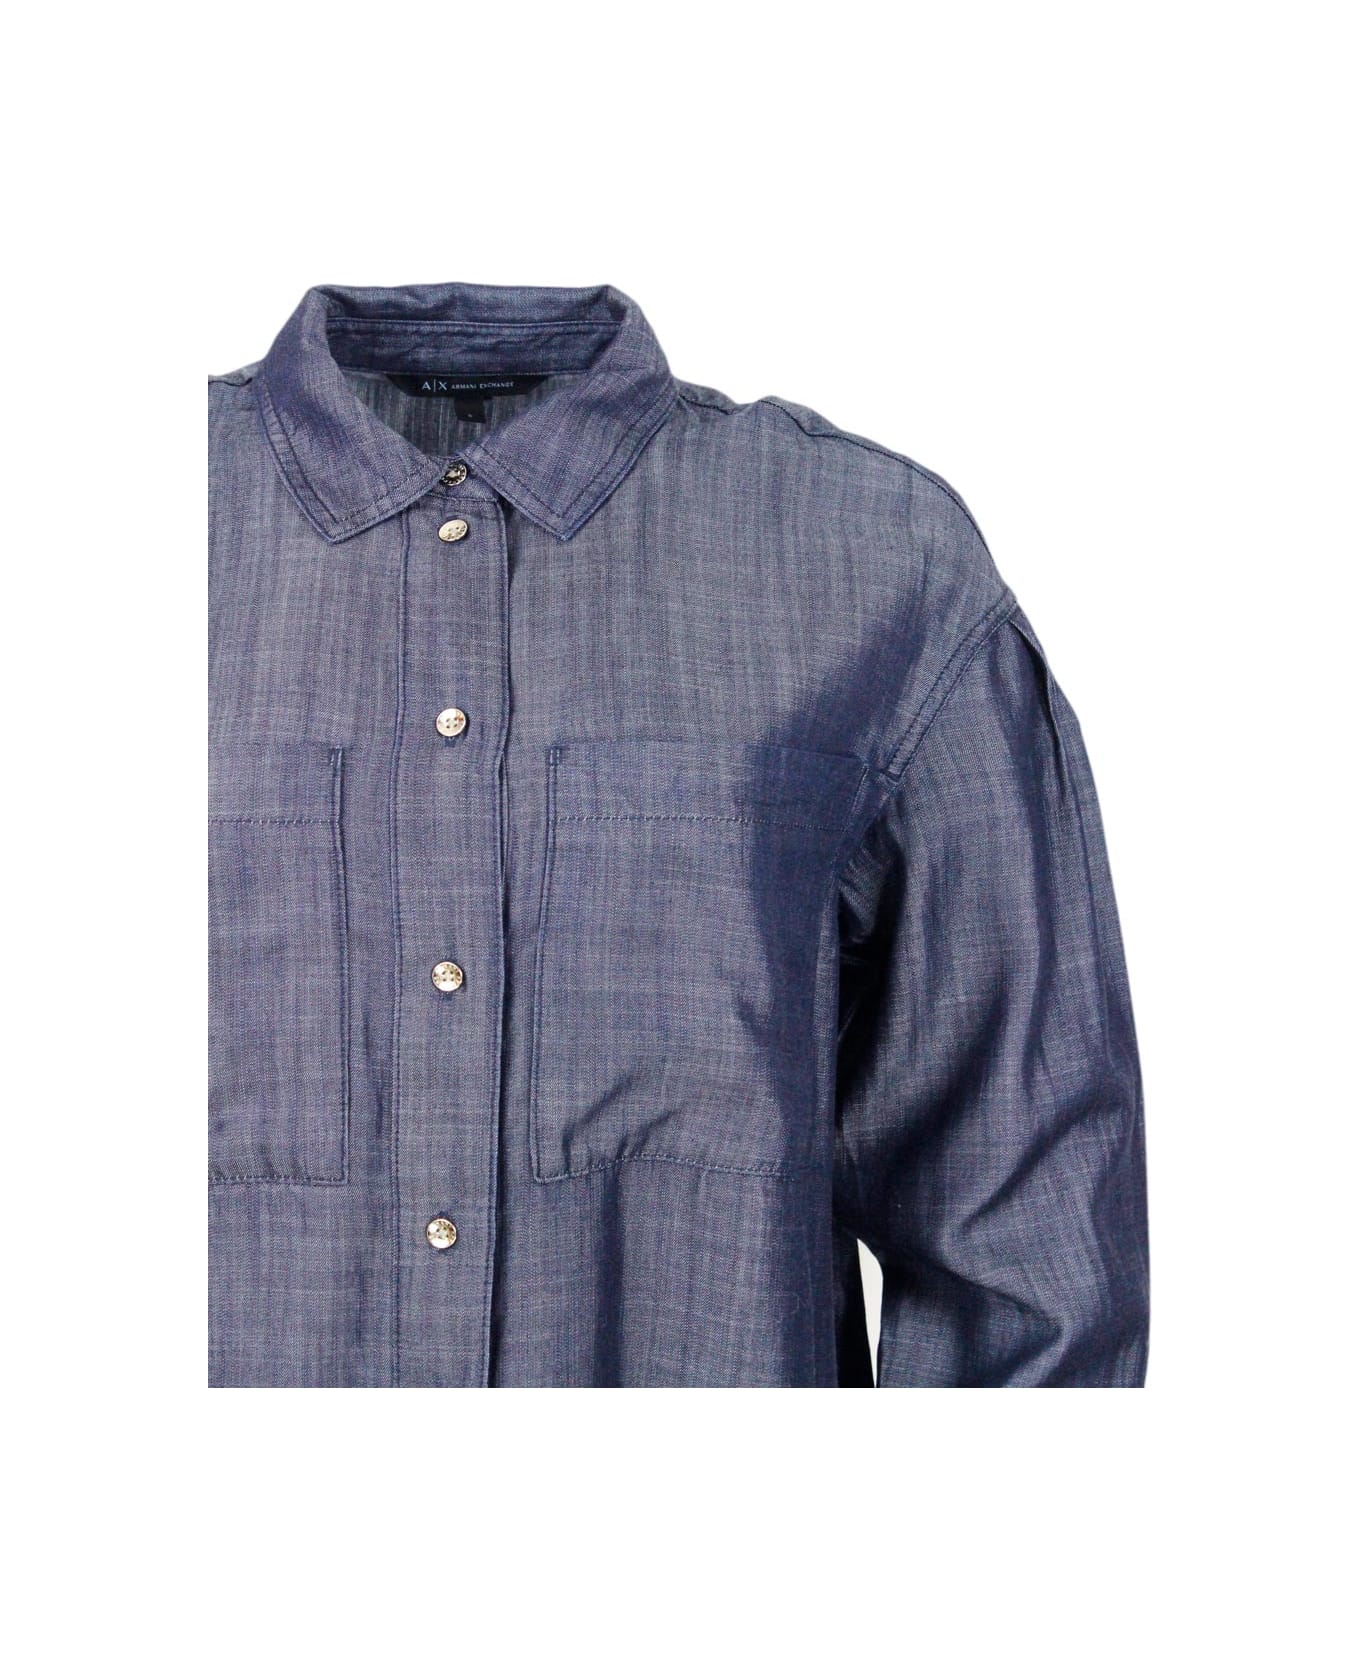 Armani Collezioni Lightweight Long-sleeved Denim Shirt With Chest Pockets And Button Closure - Denim Dark